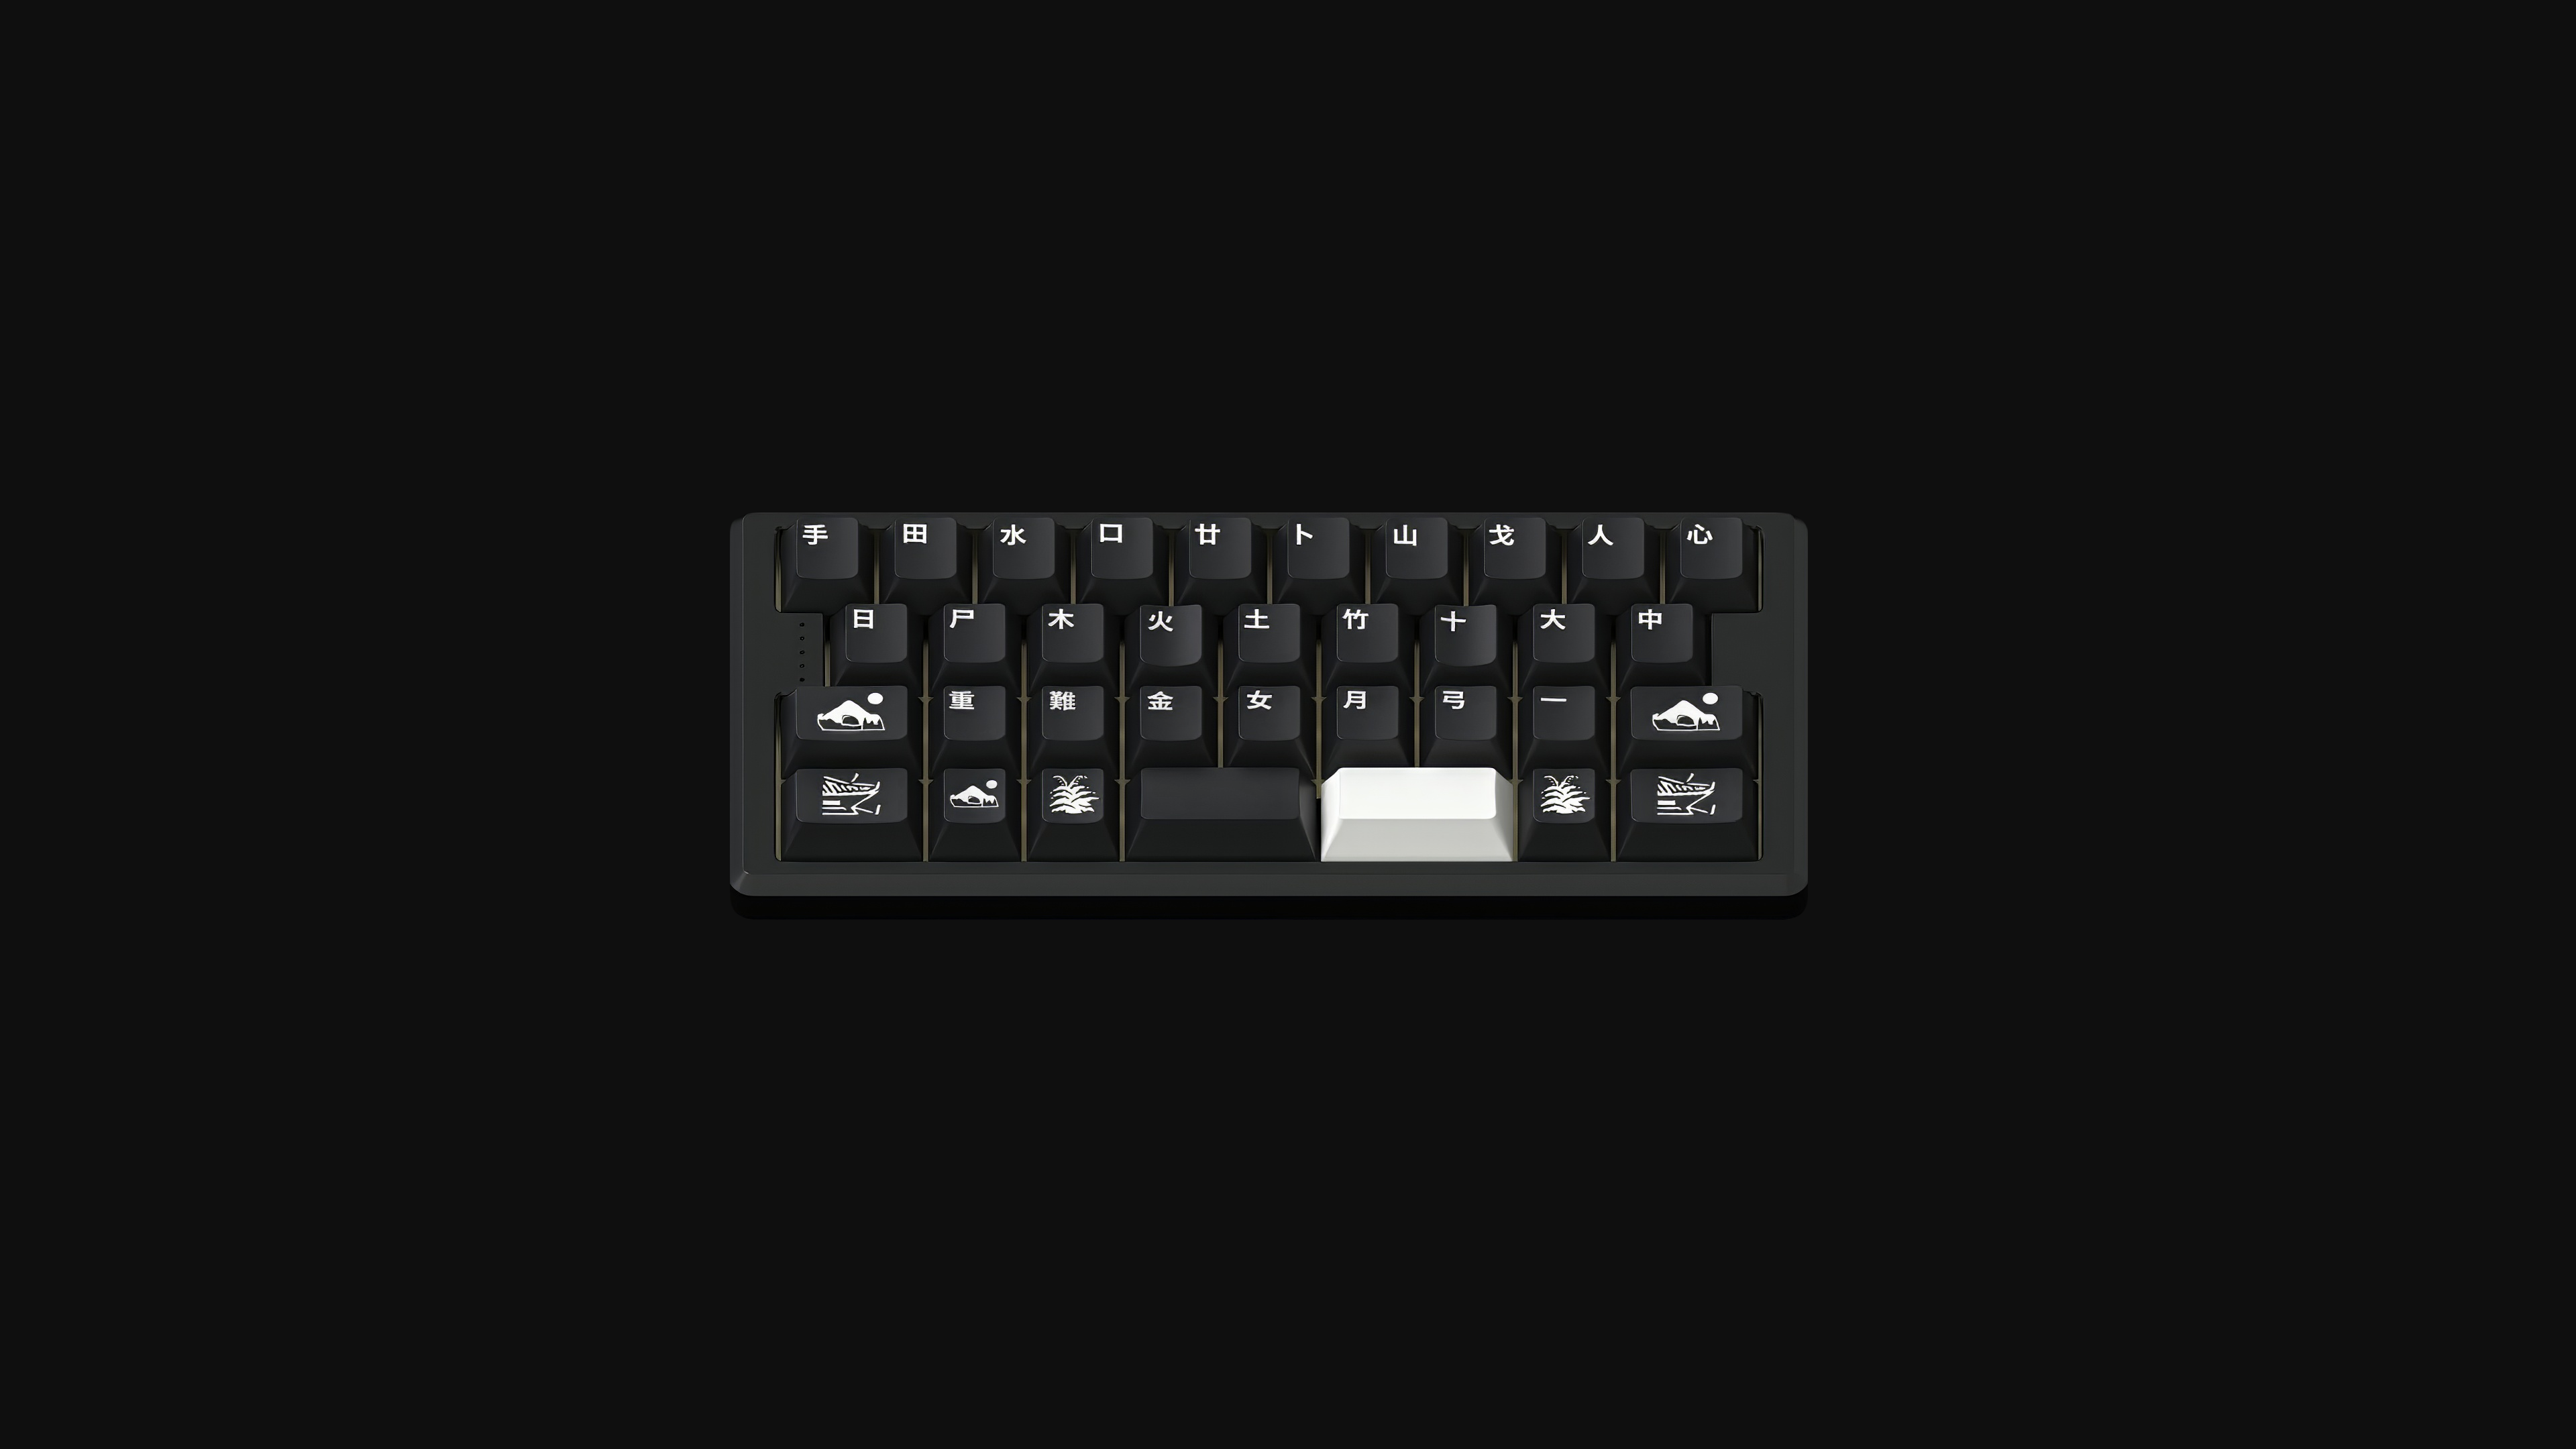 Keyboards Minimalism Technology Digital Art Simple Background Black Background 3840x2160